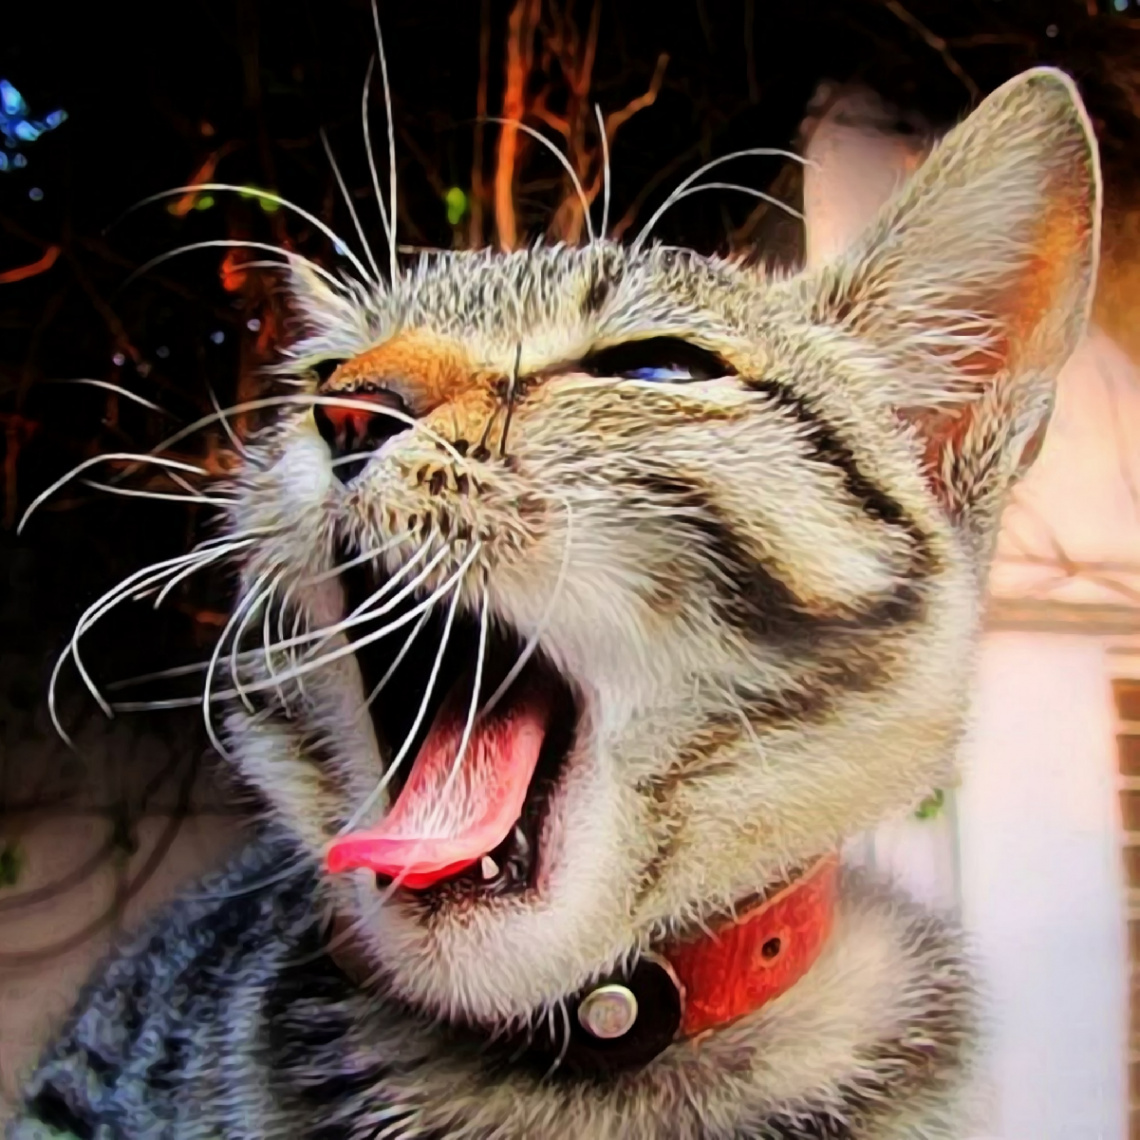 What a yawn!! 